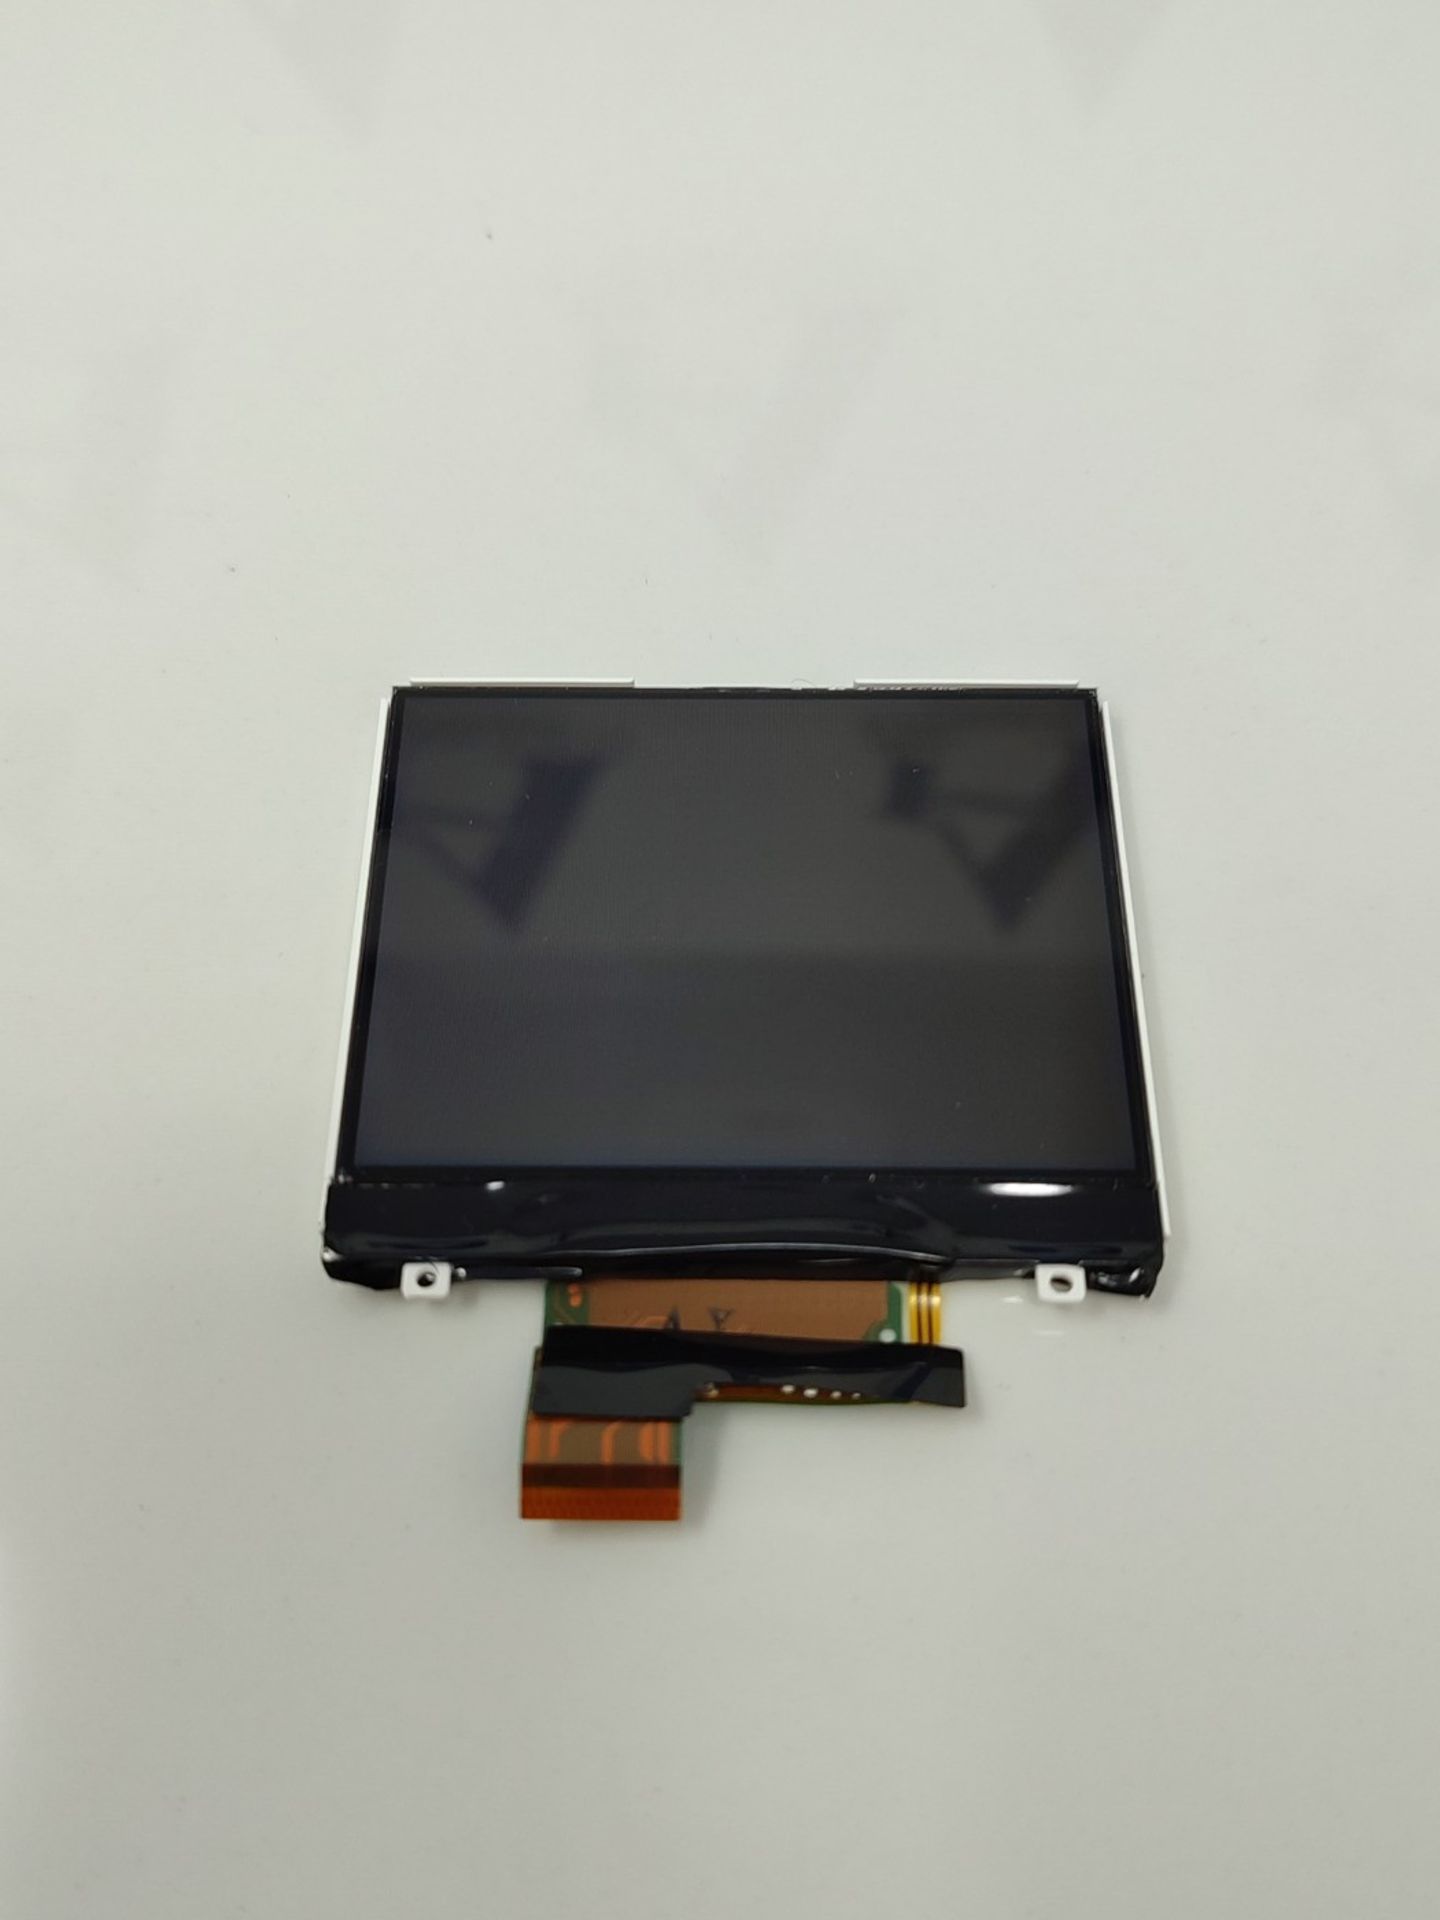 LCD Display Screen Repair Kit Replacement Part for lPod Video 5th 5.5G 30gb/60gb/80gb